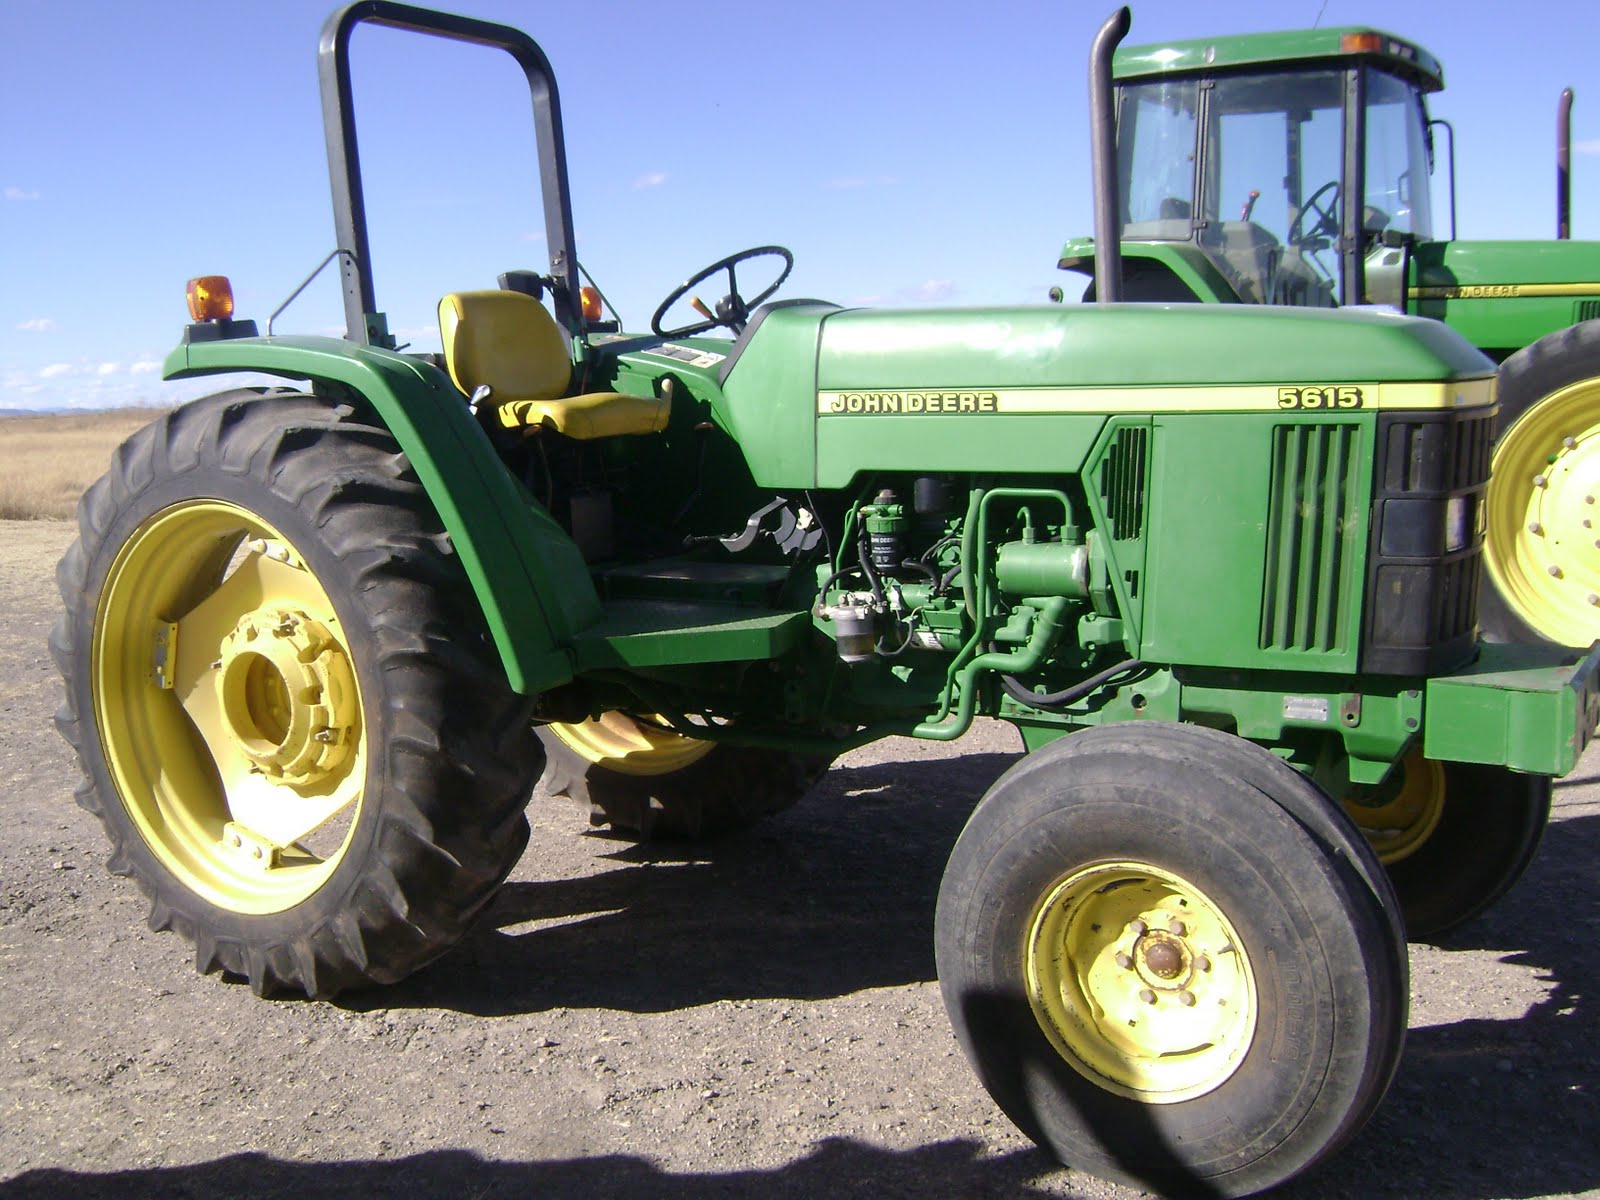 ... AGRICOLA INDUSTRIAL: Tractor John Deere 5615 por $14,000 Dlls cgu